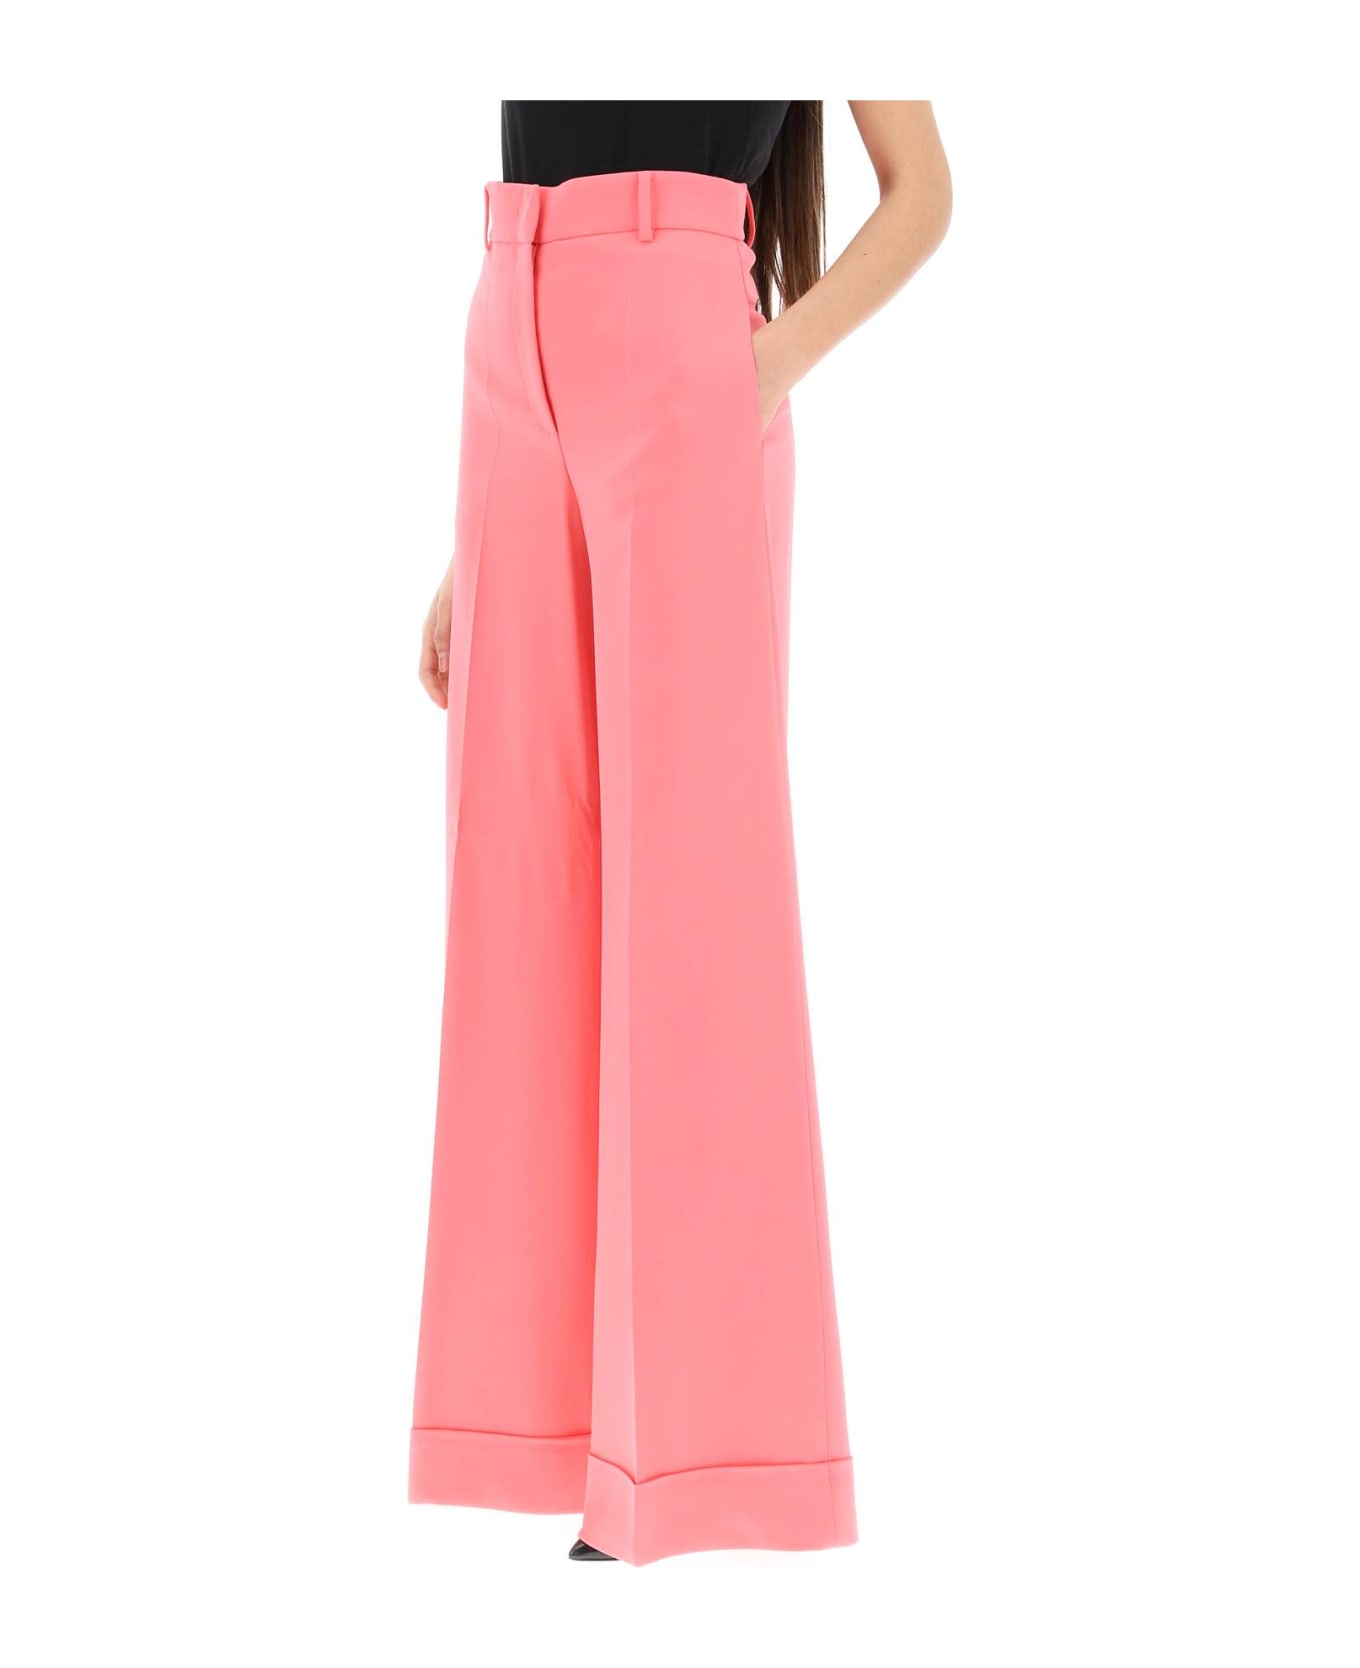 Moschino High Waist Pants - FUXIA (Pink)